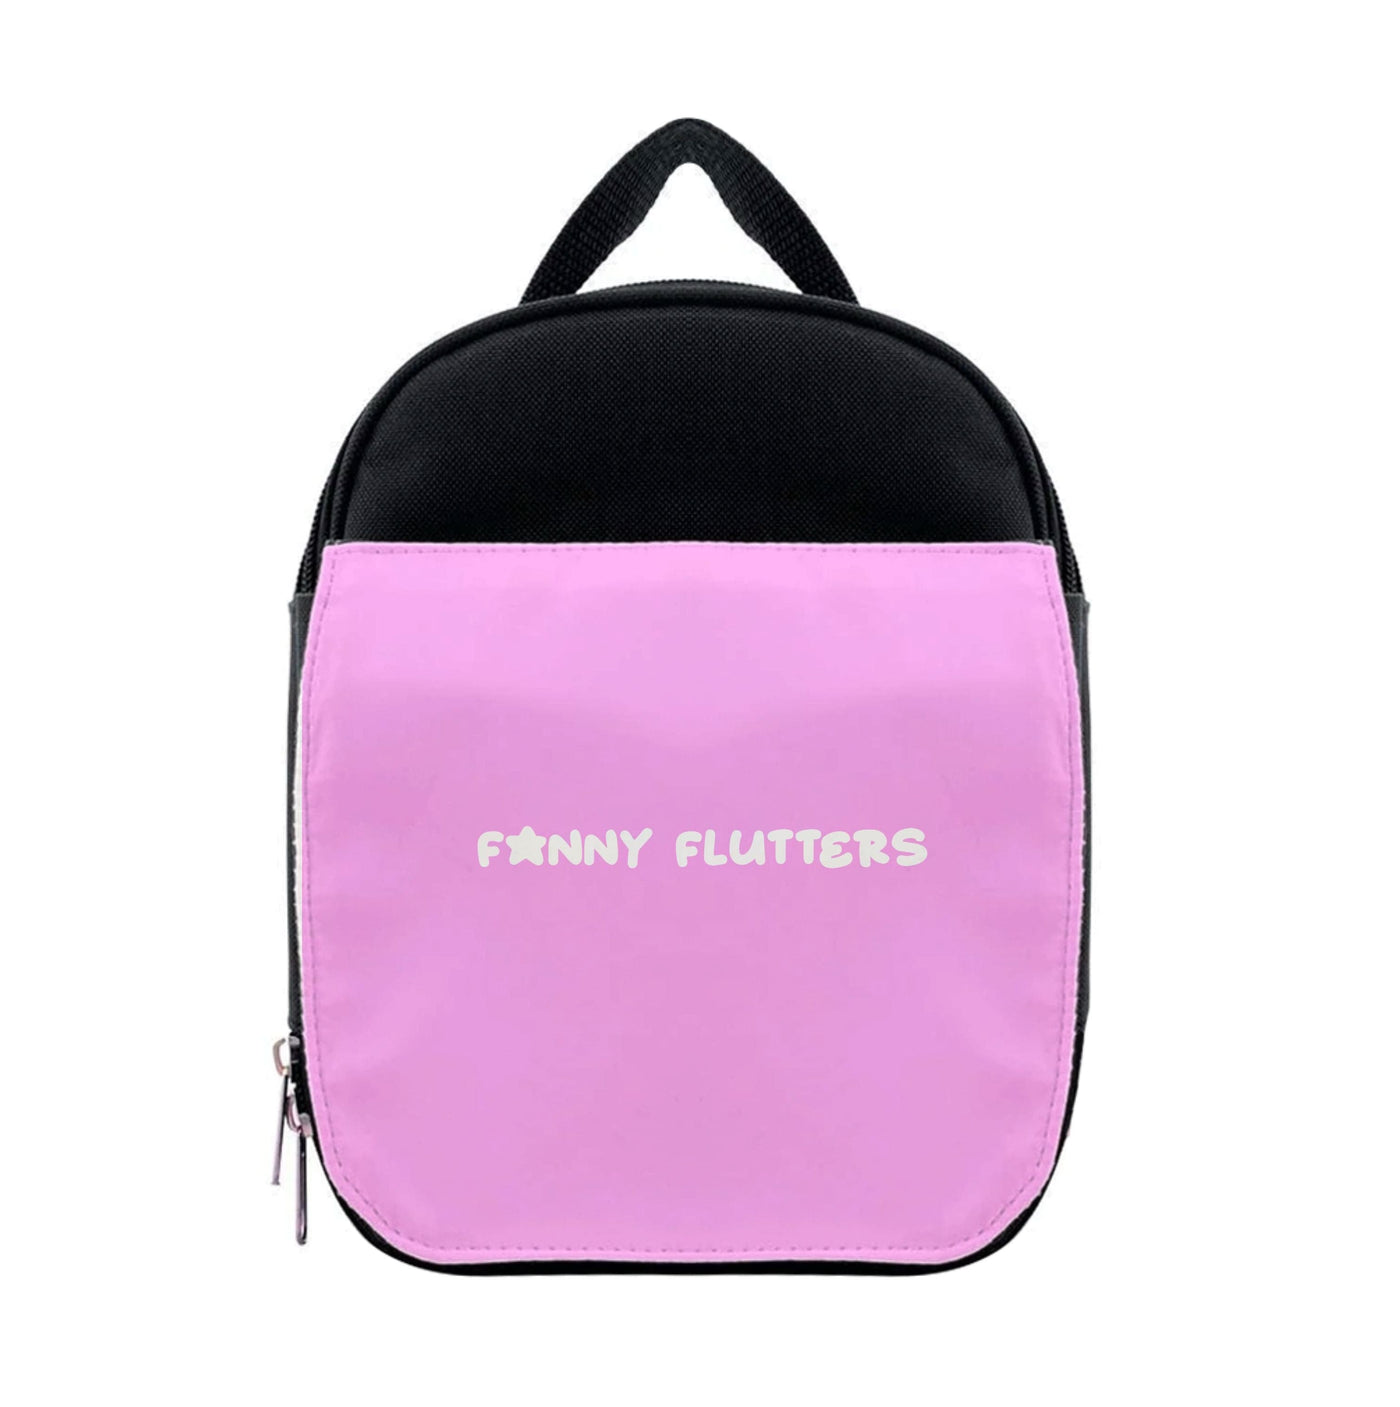 F*nny Flutters - Islanders Lunchbox